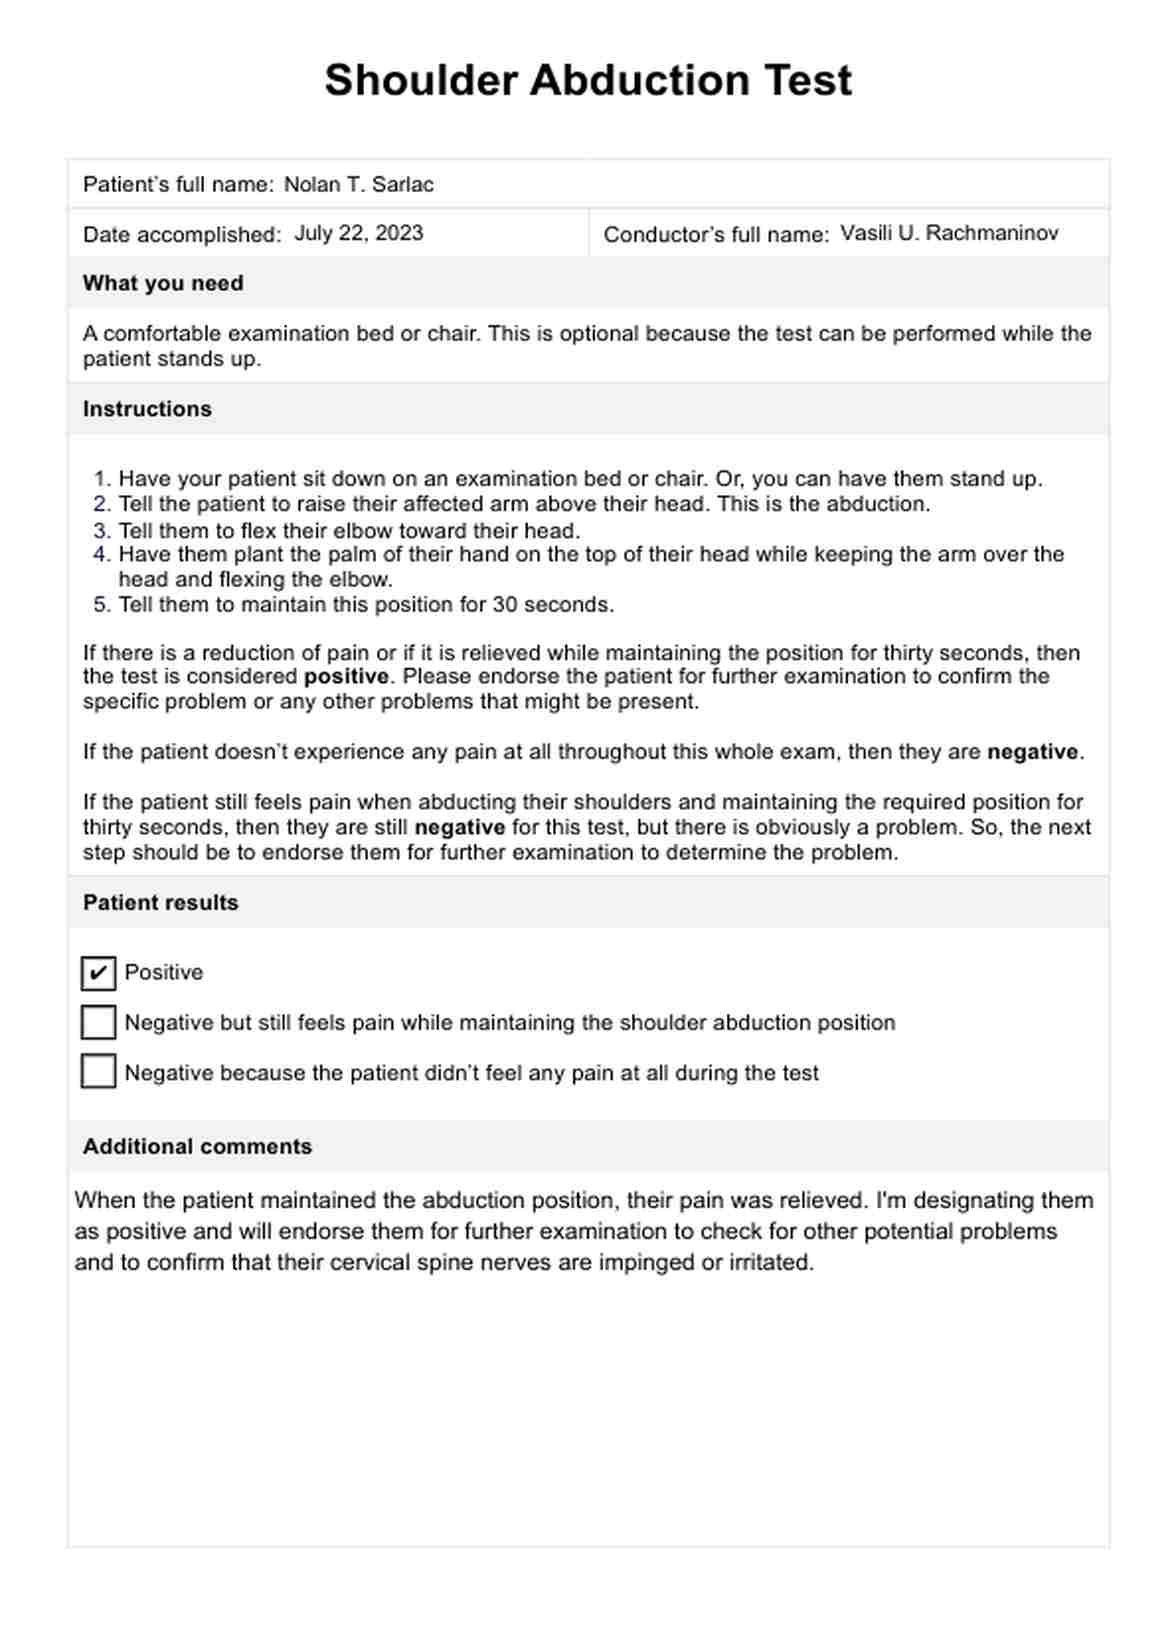 Shoulder Abduction Test PDF Example